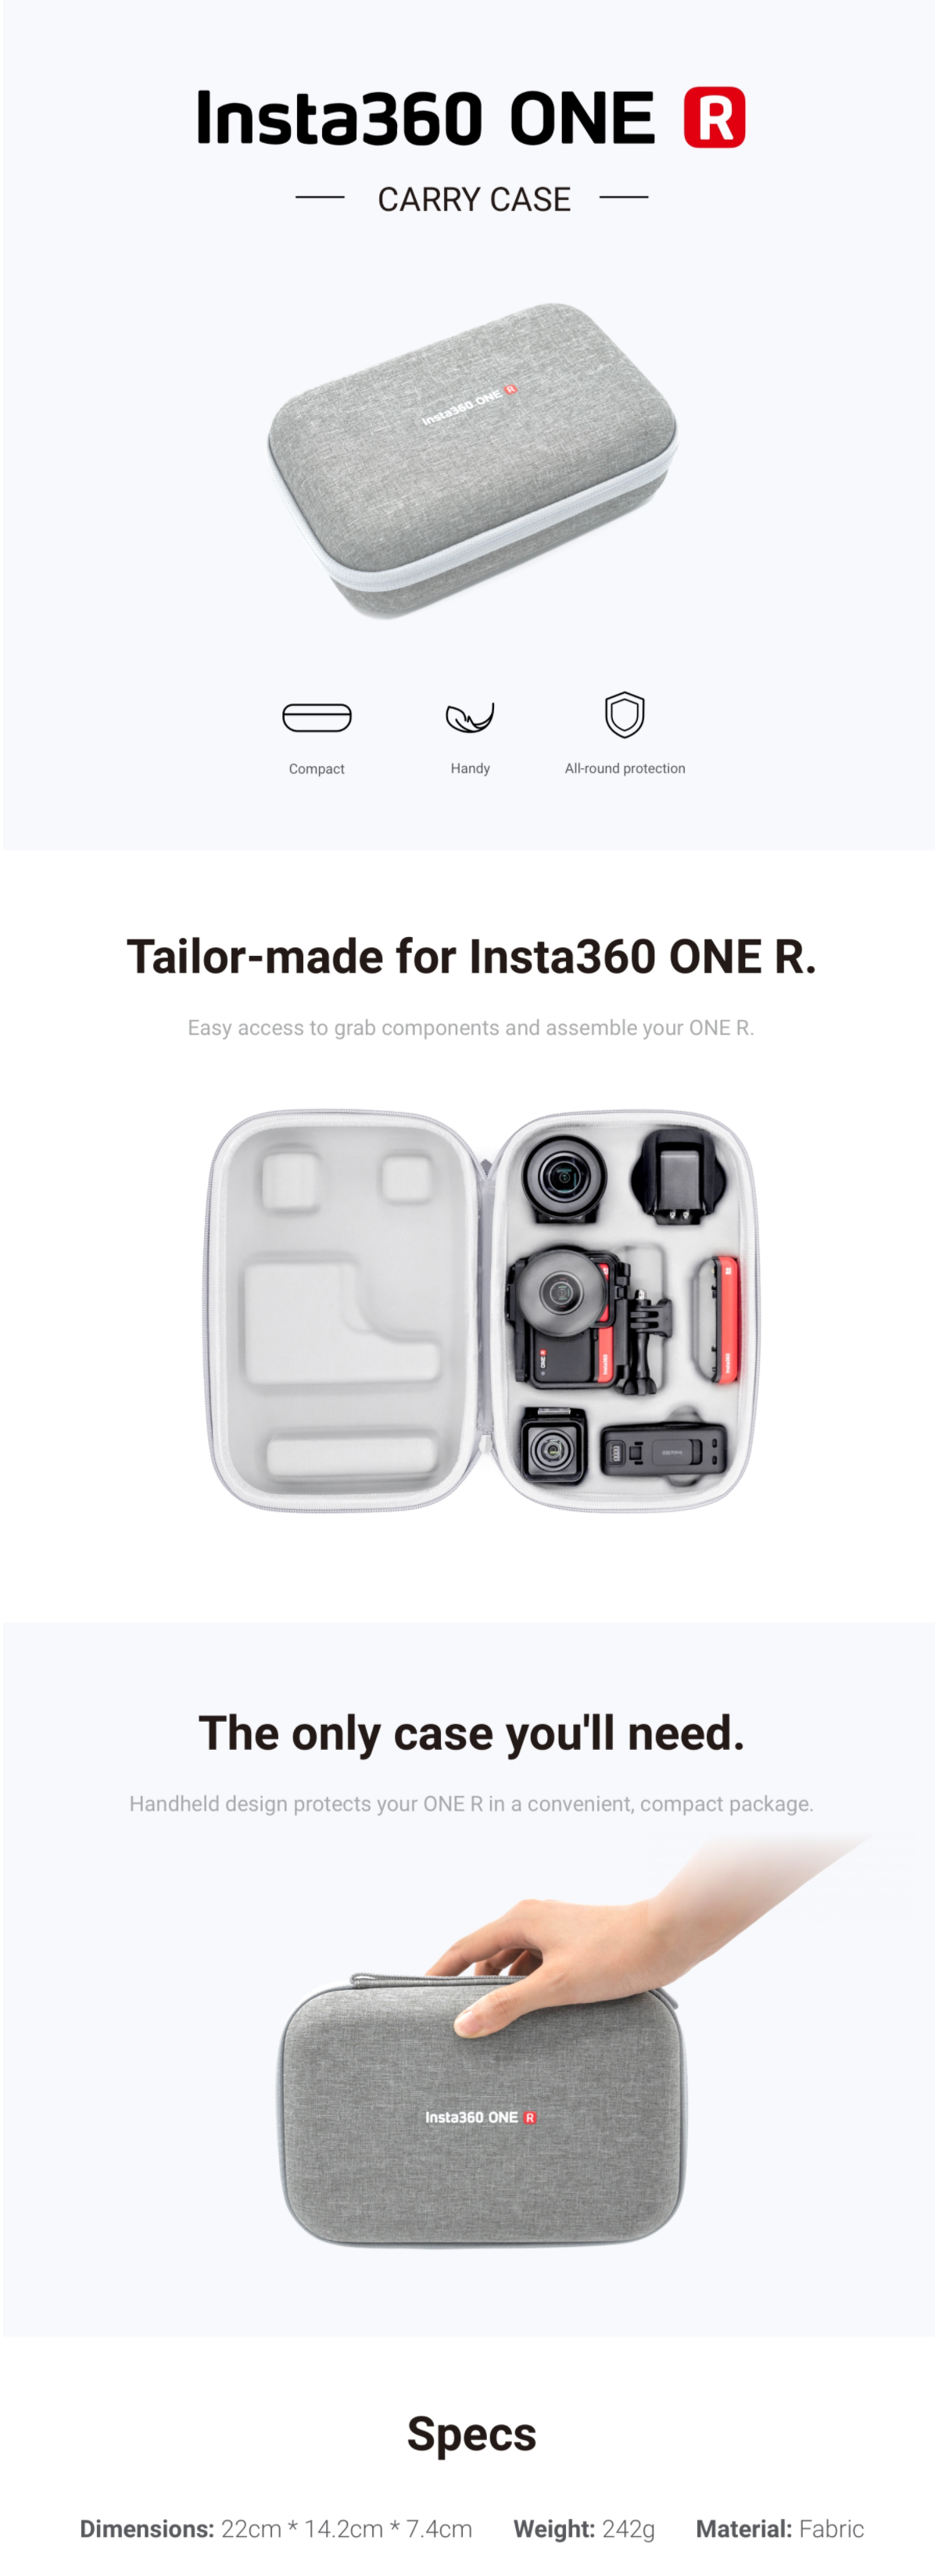 insta360 Carry Case